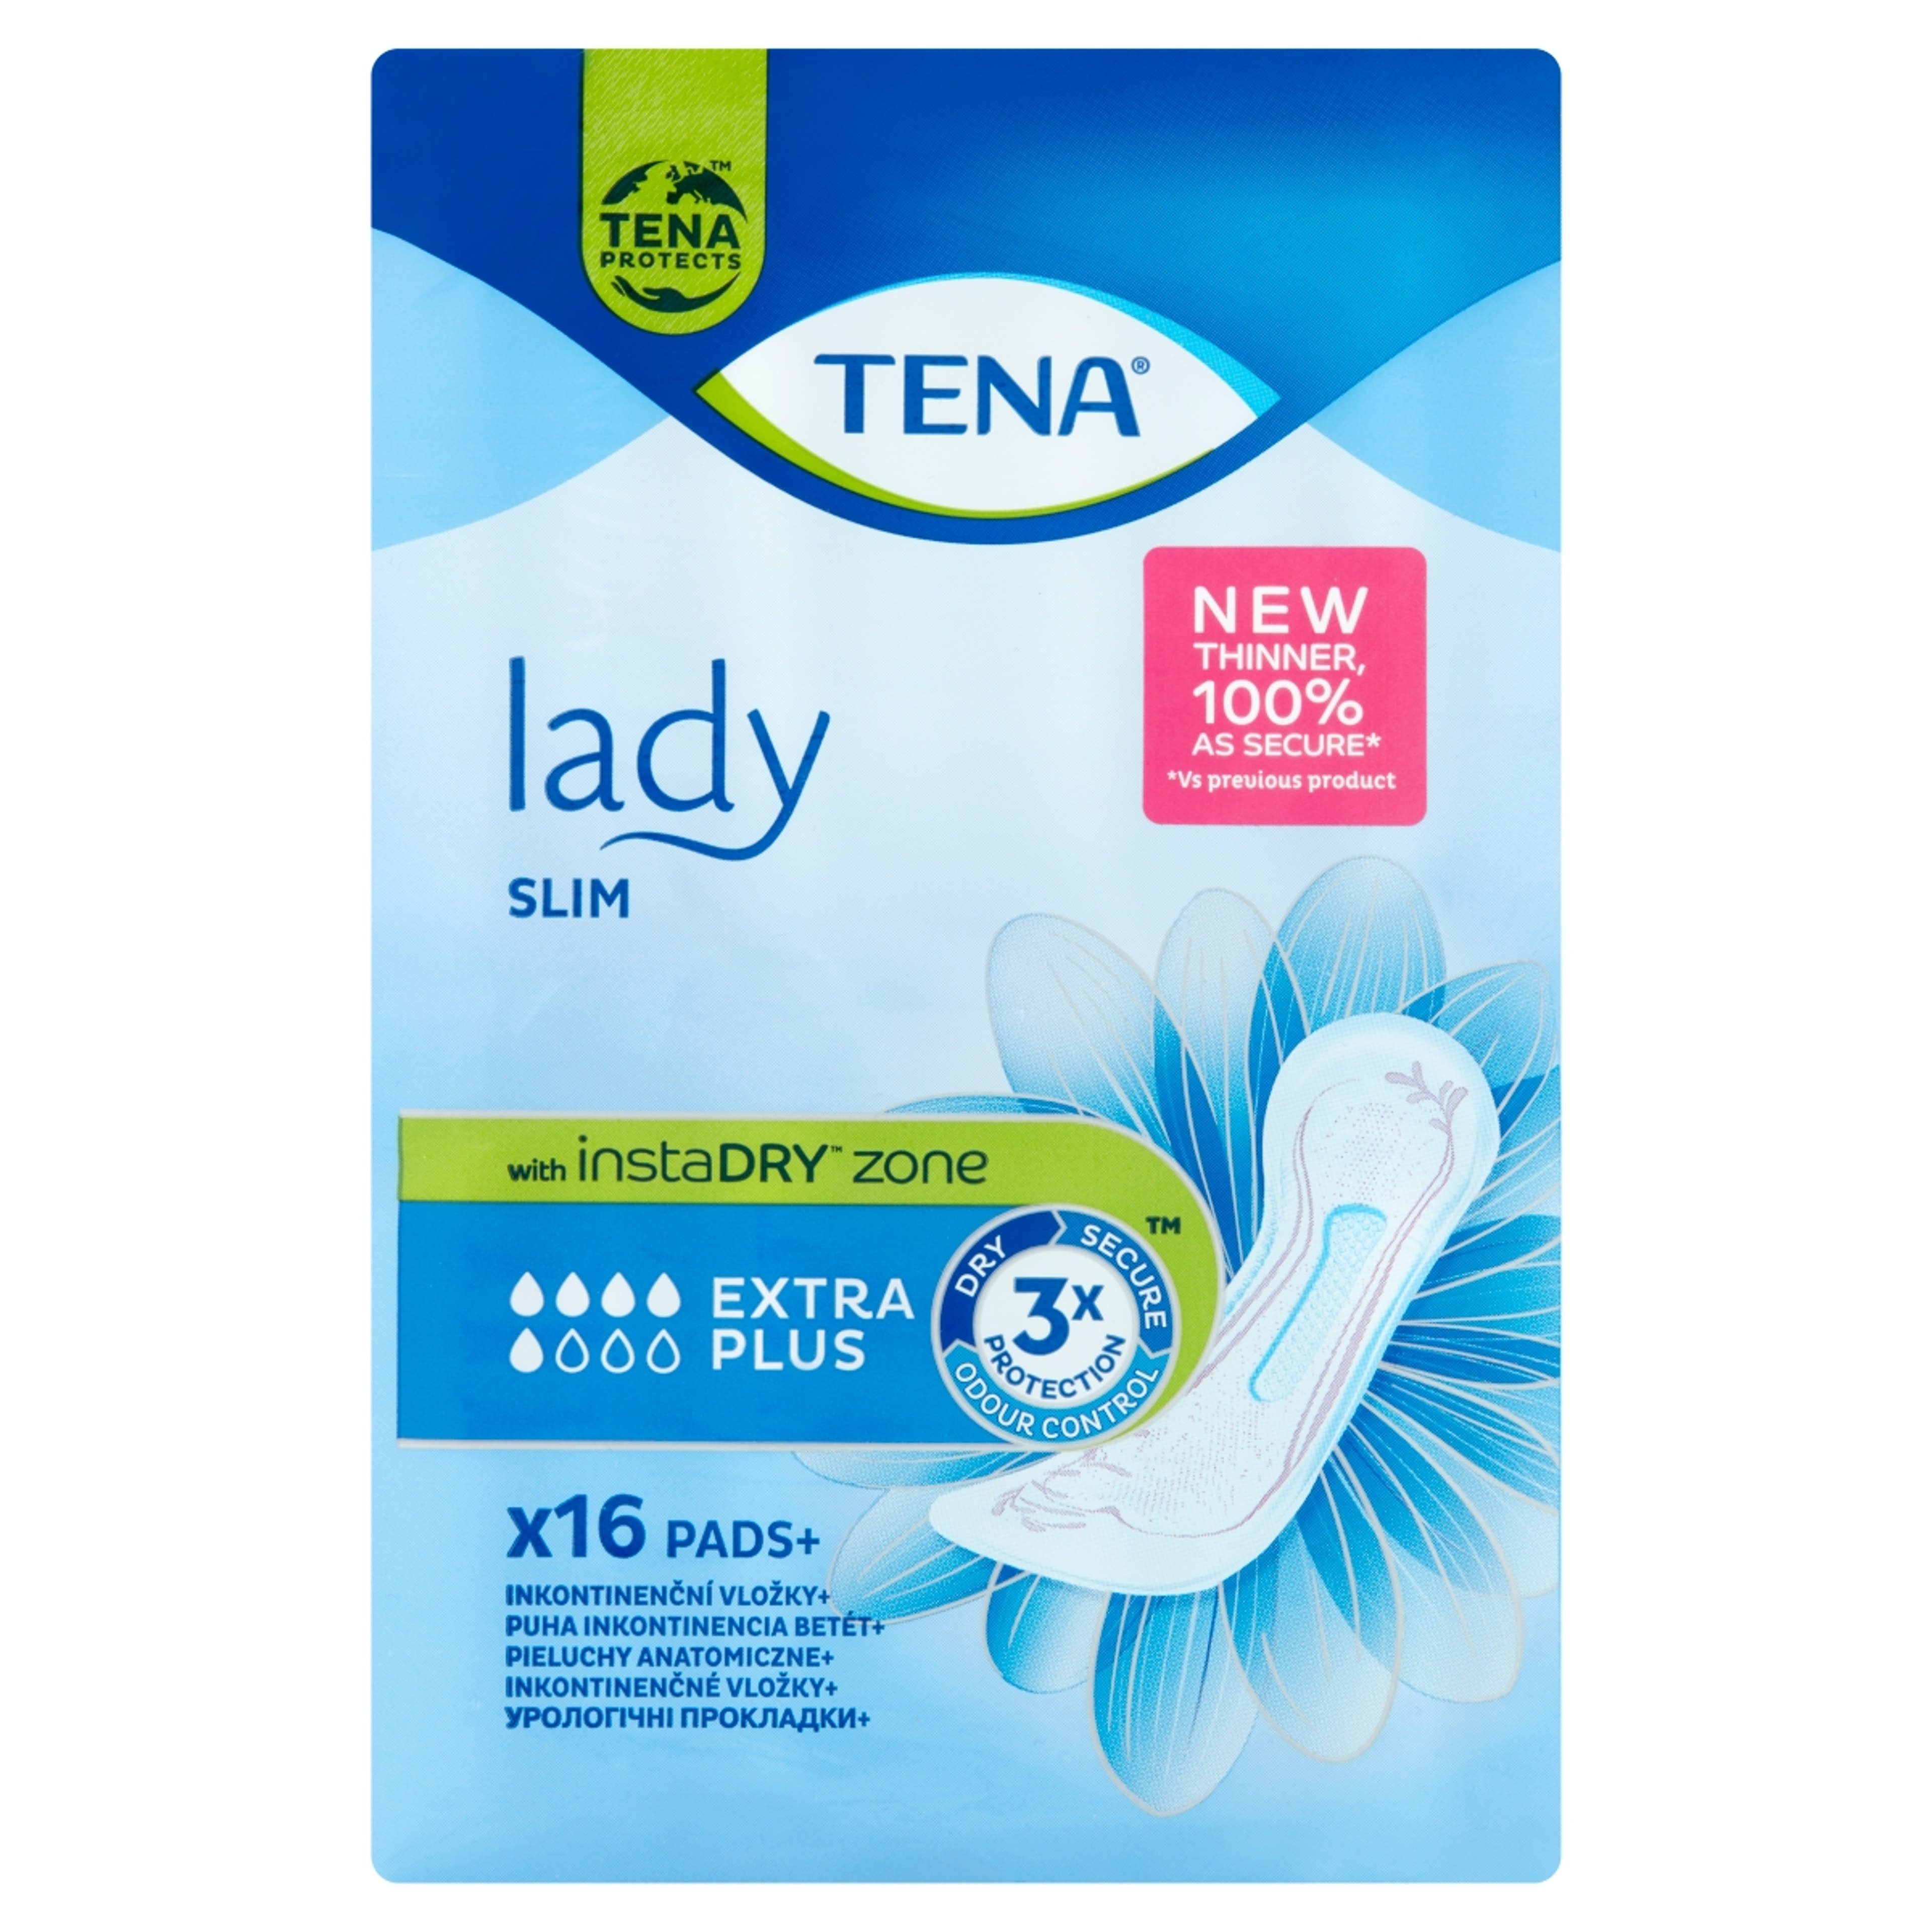 Tena Lady inkontinencia betét extra plus - 16 db